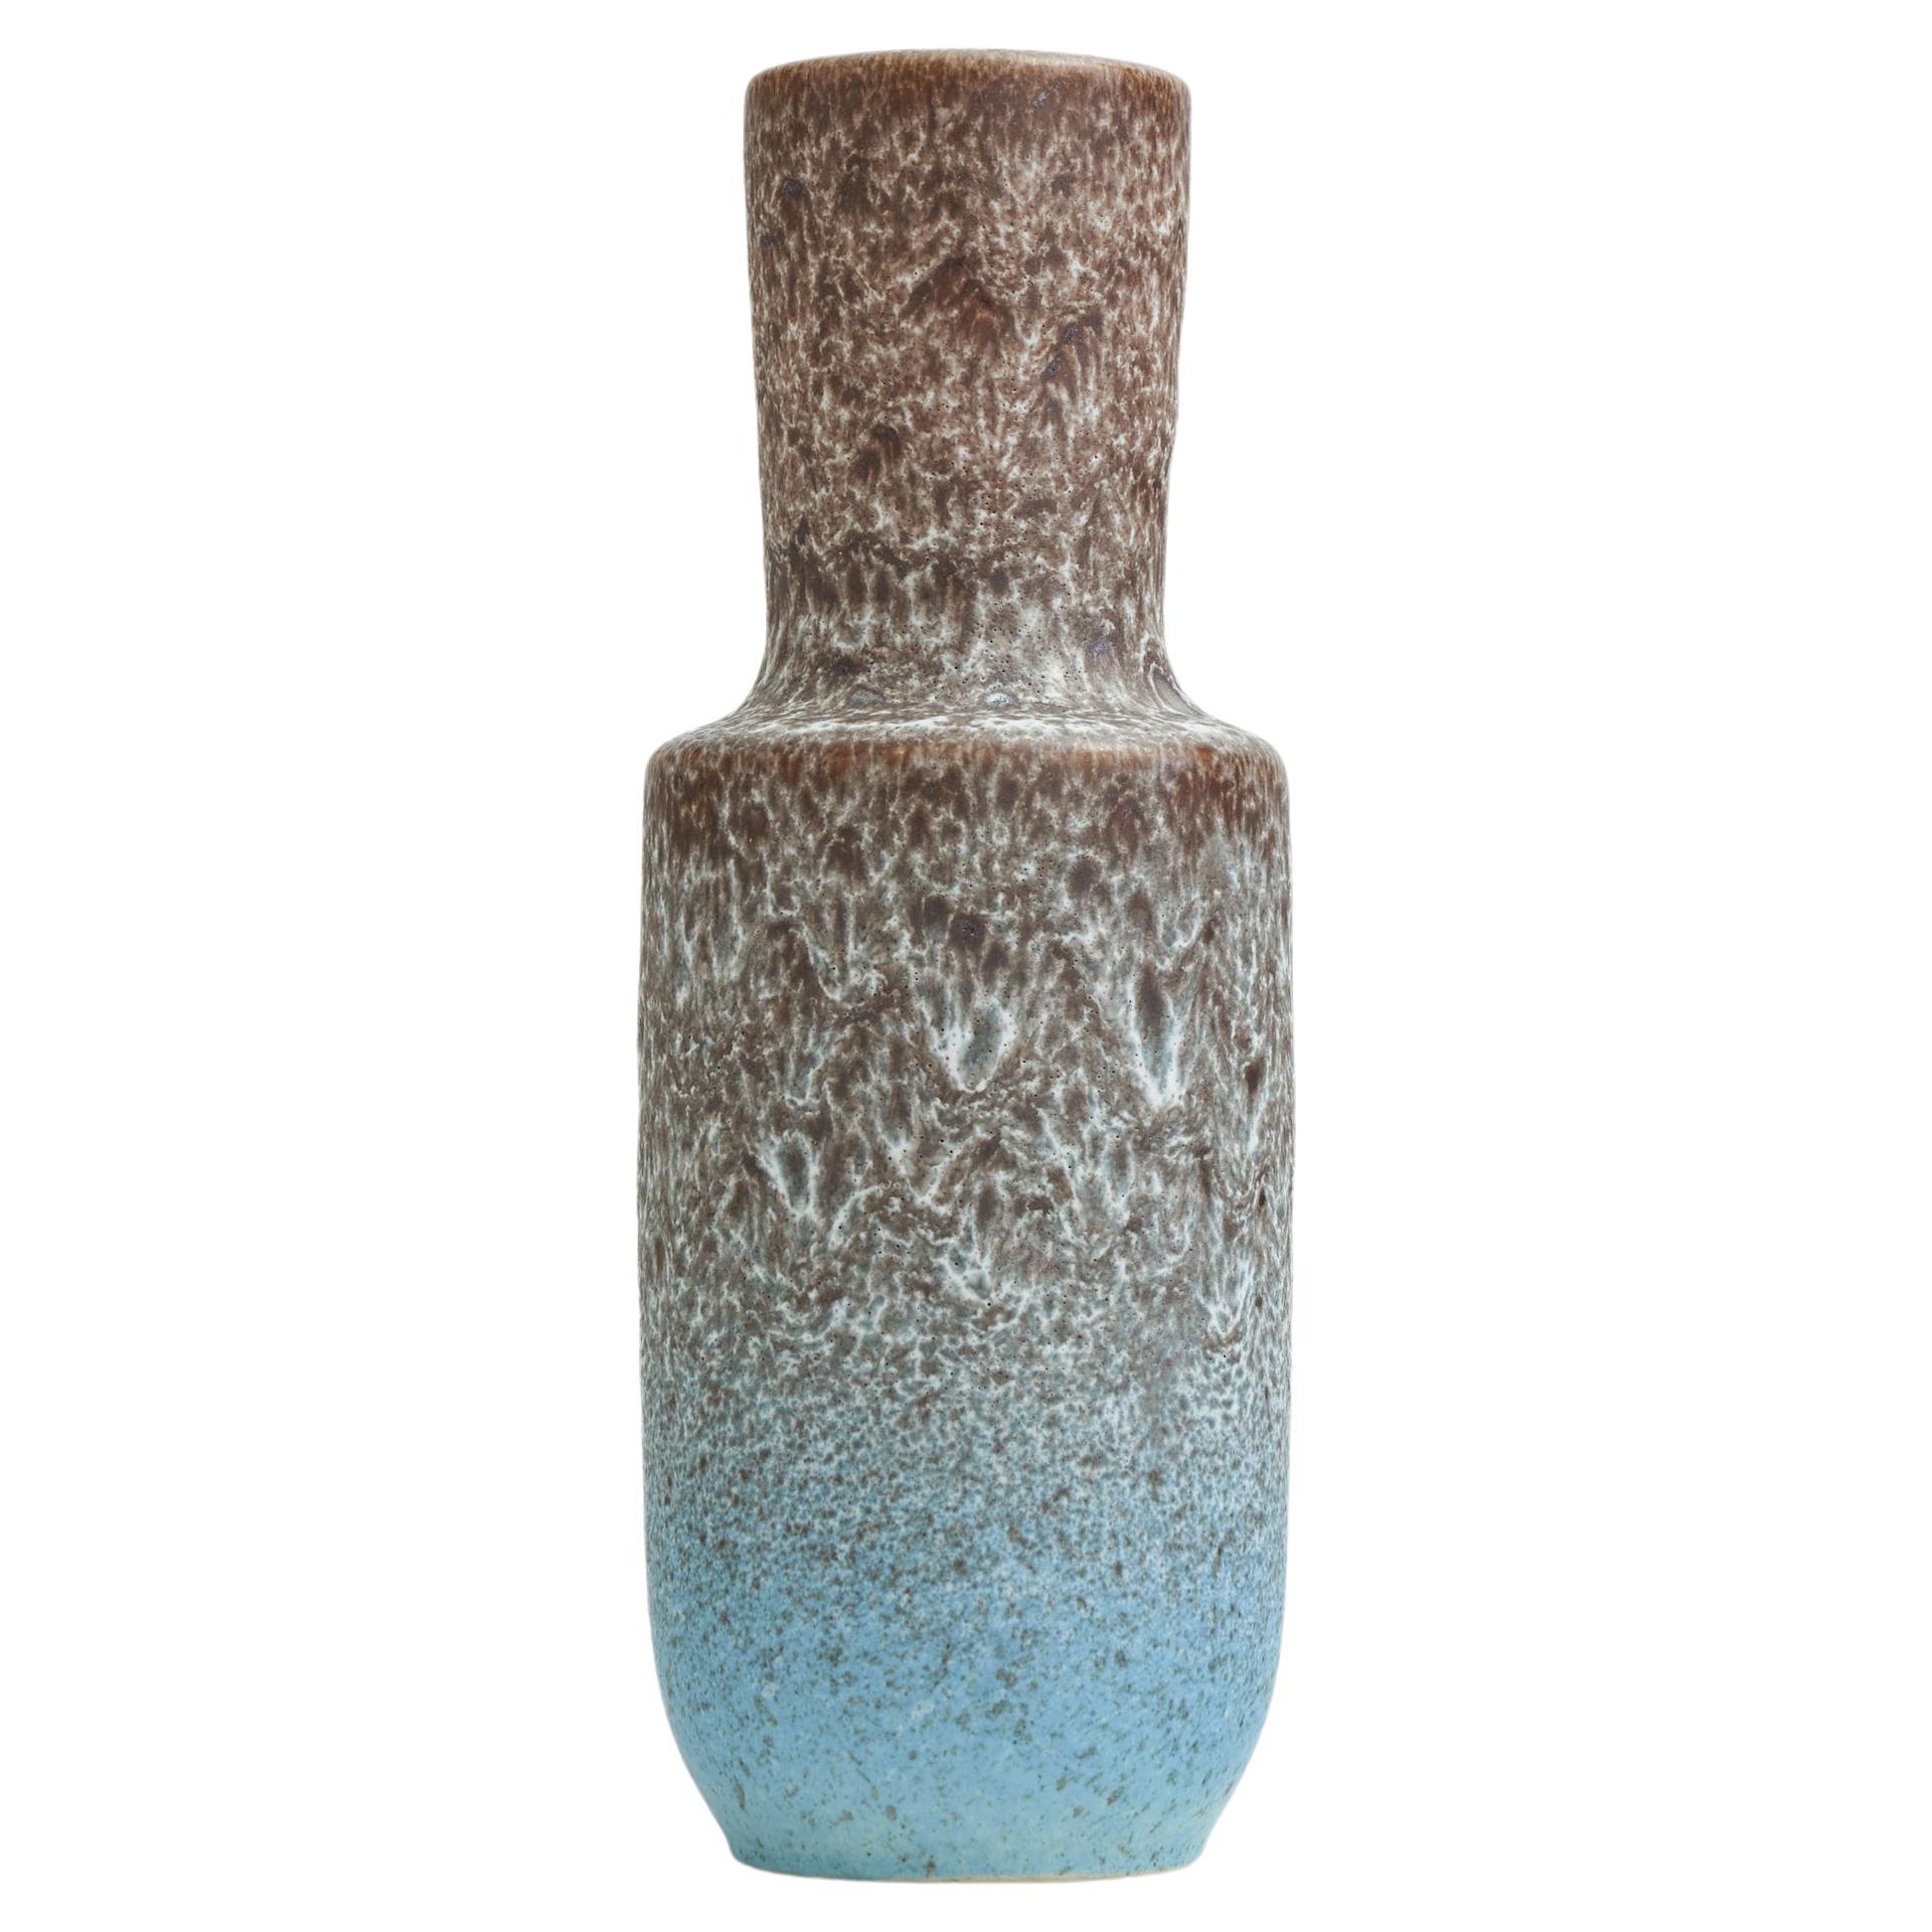 Volcanic Glazed Mid Century Pottery Vase by Steuler Keramik, 1960s For Sale